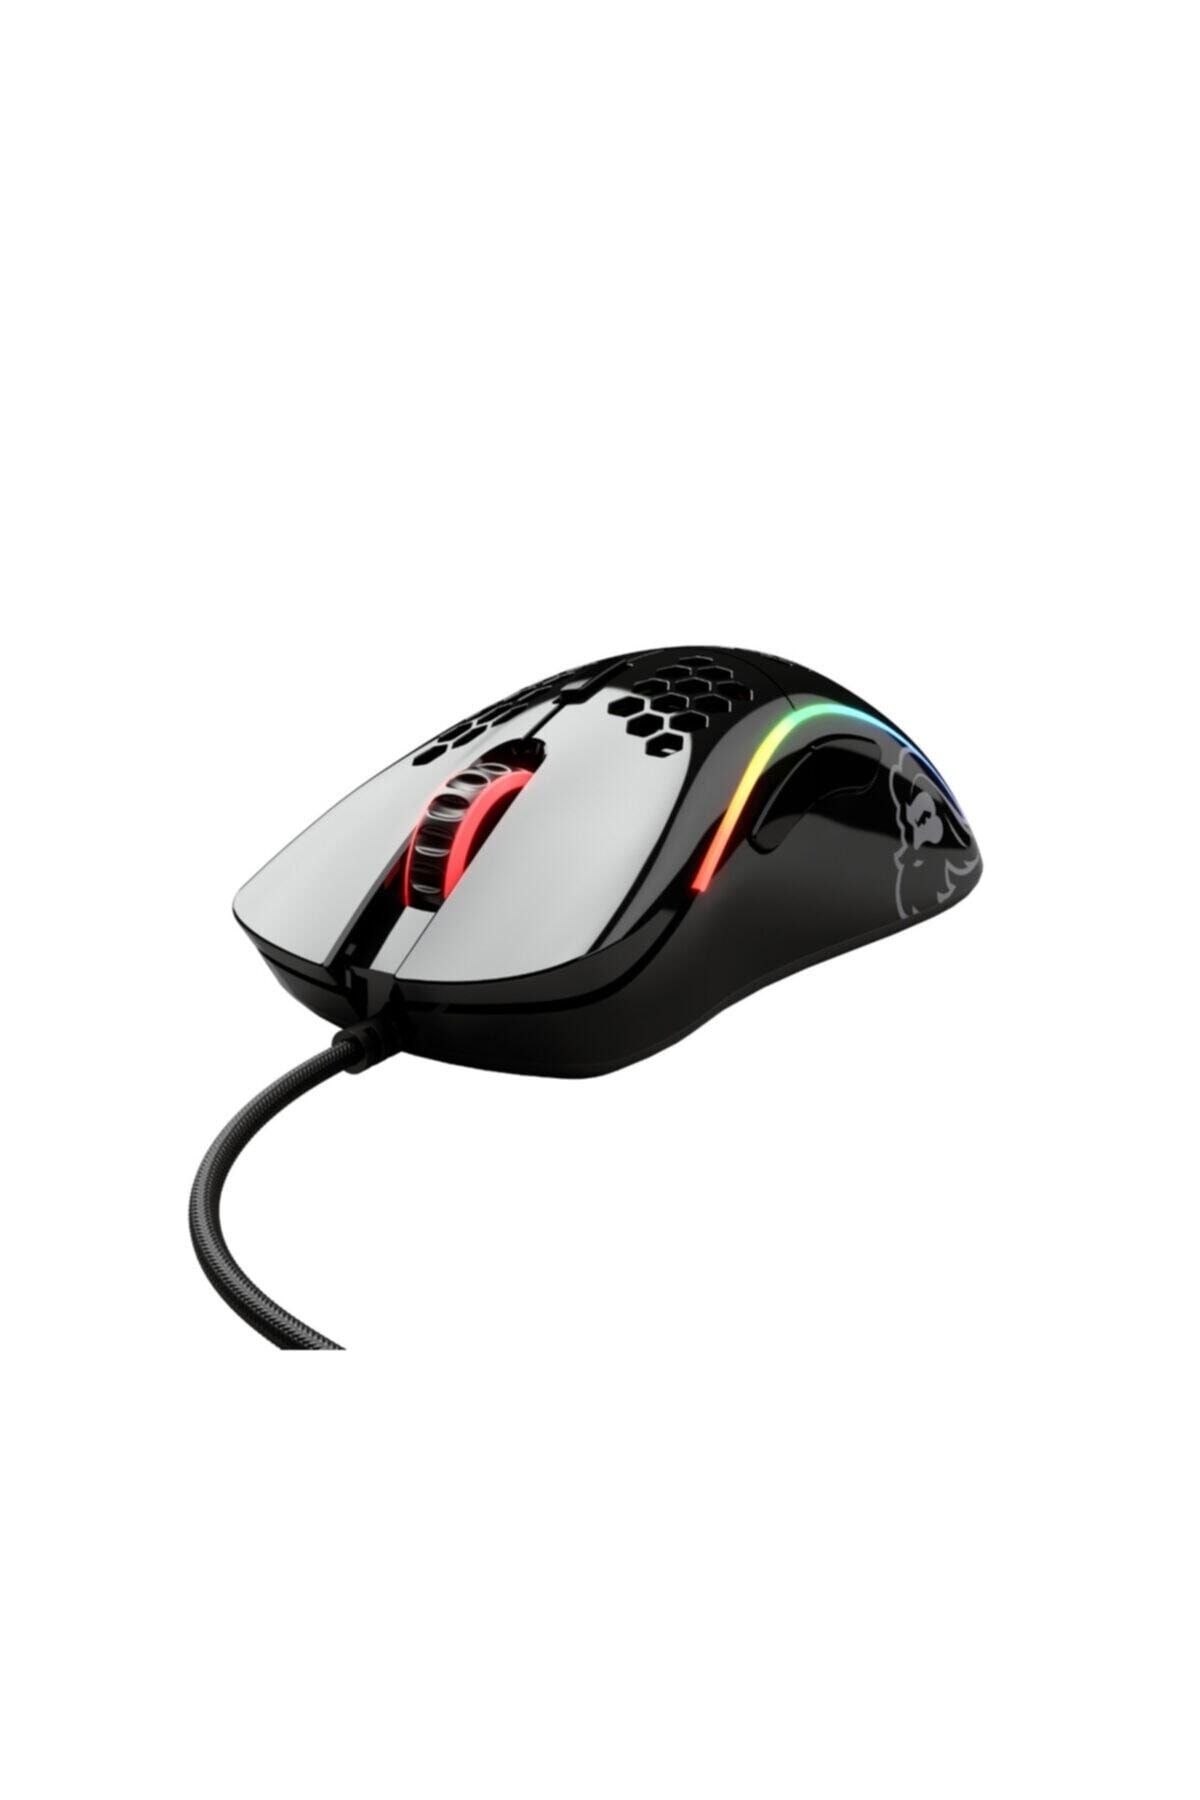 Glorious Model D Kablolu Parlak Siyah Rgb Oyuncu Mouse 69gr